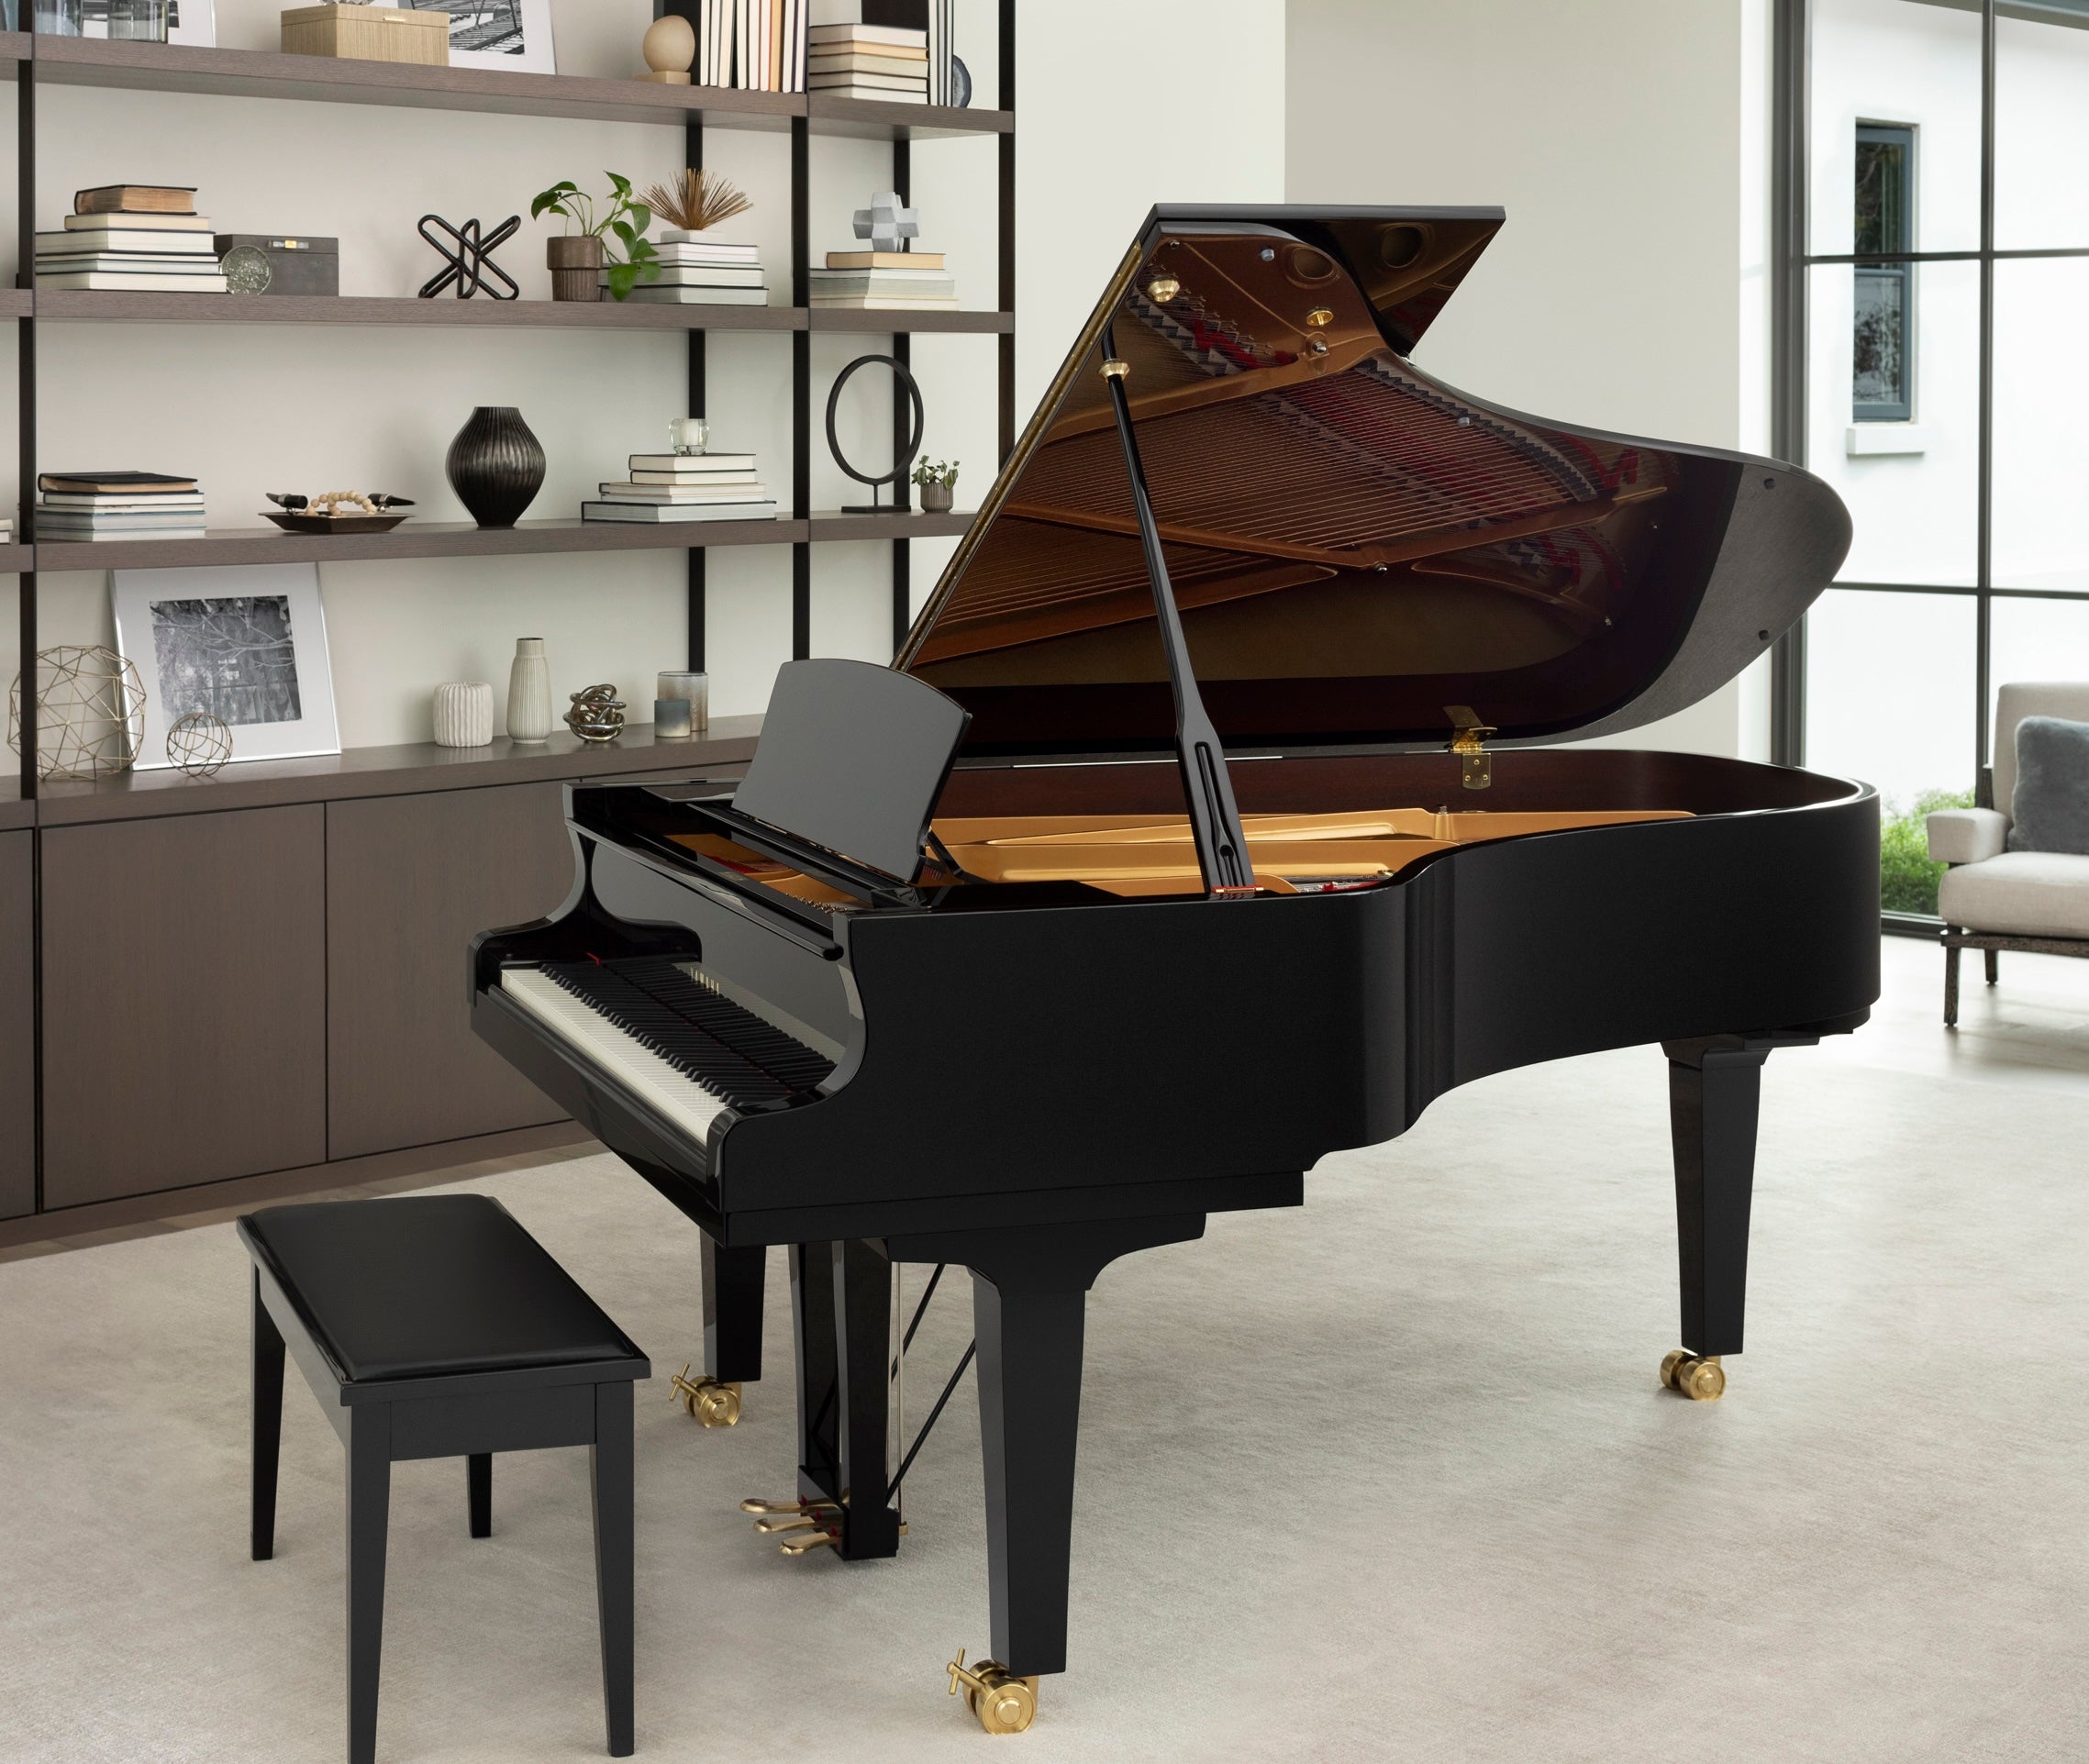 Yamaha S3X 6'1" Grand Piano